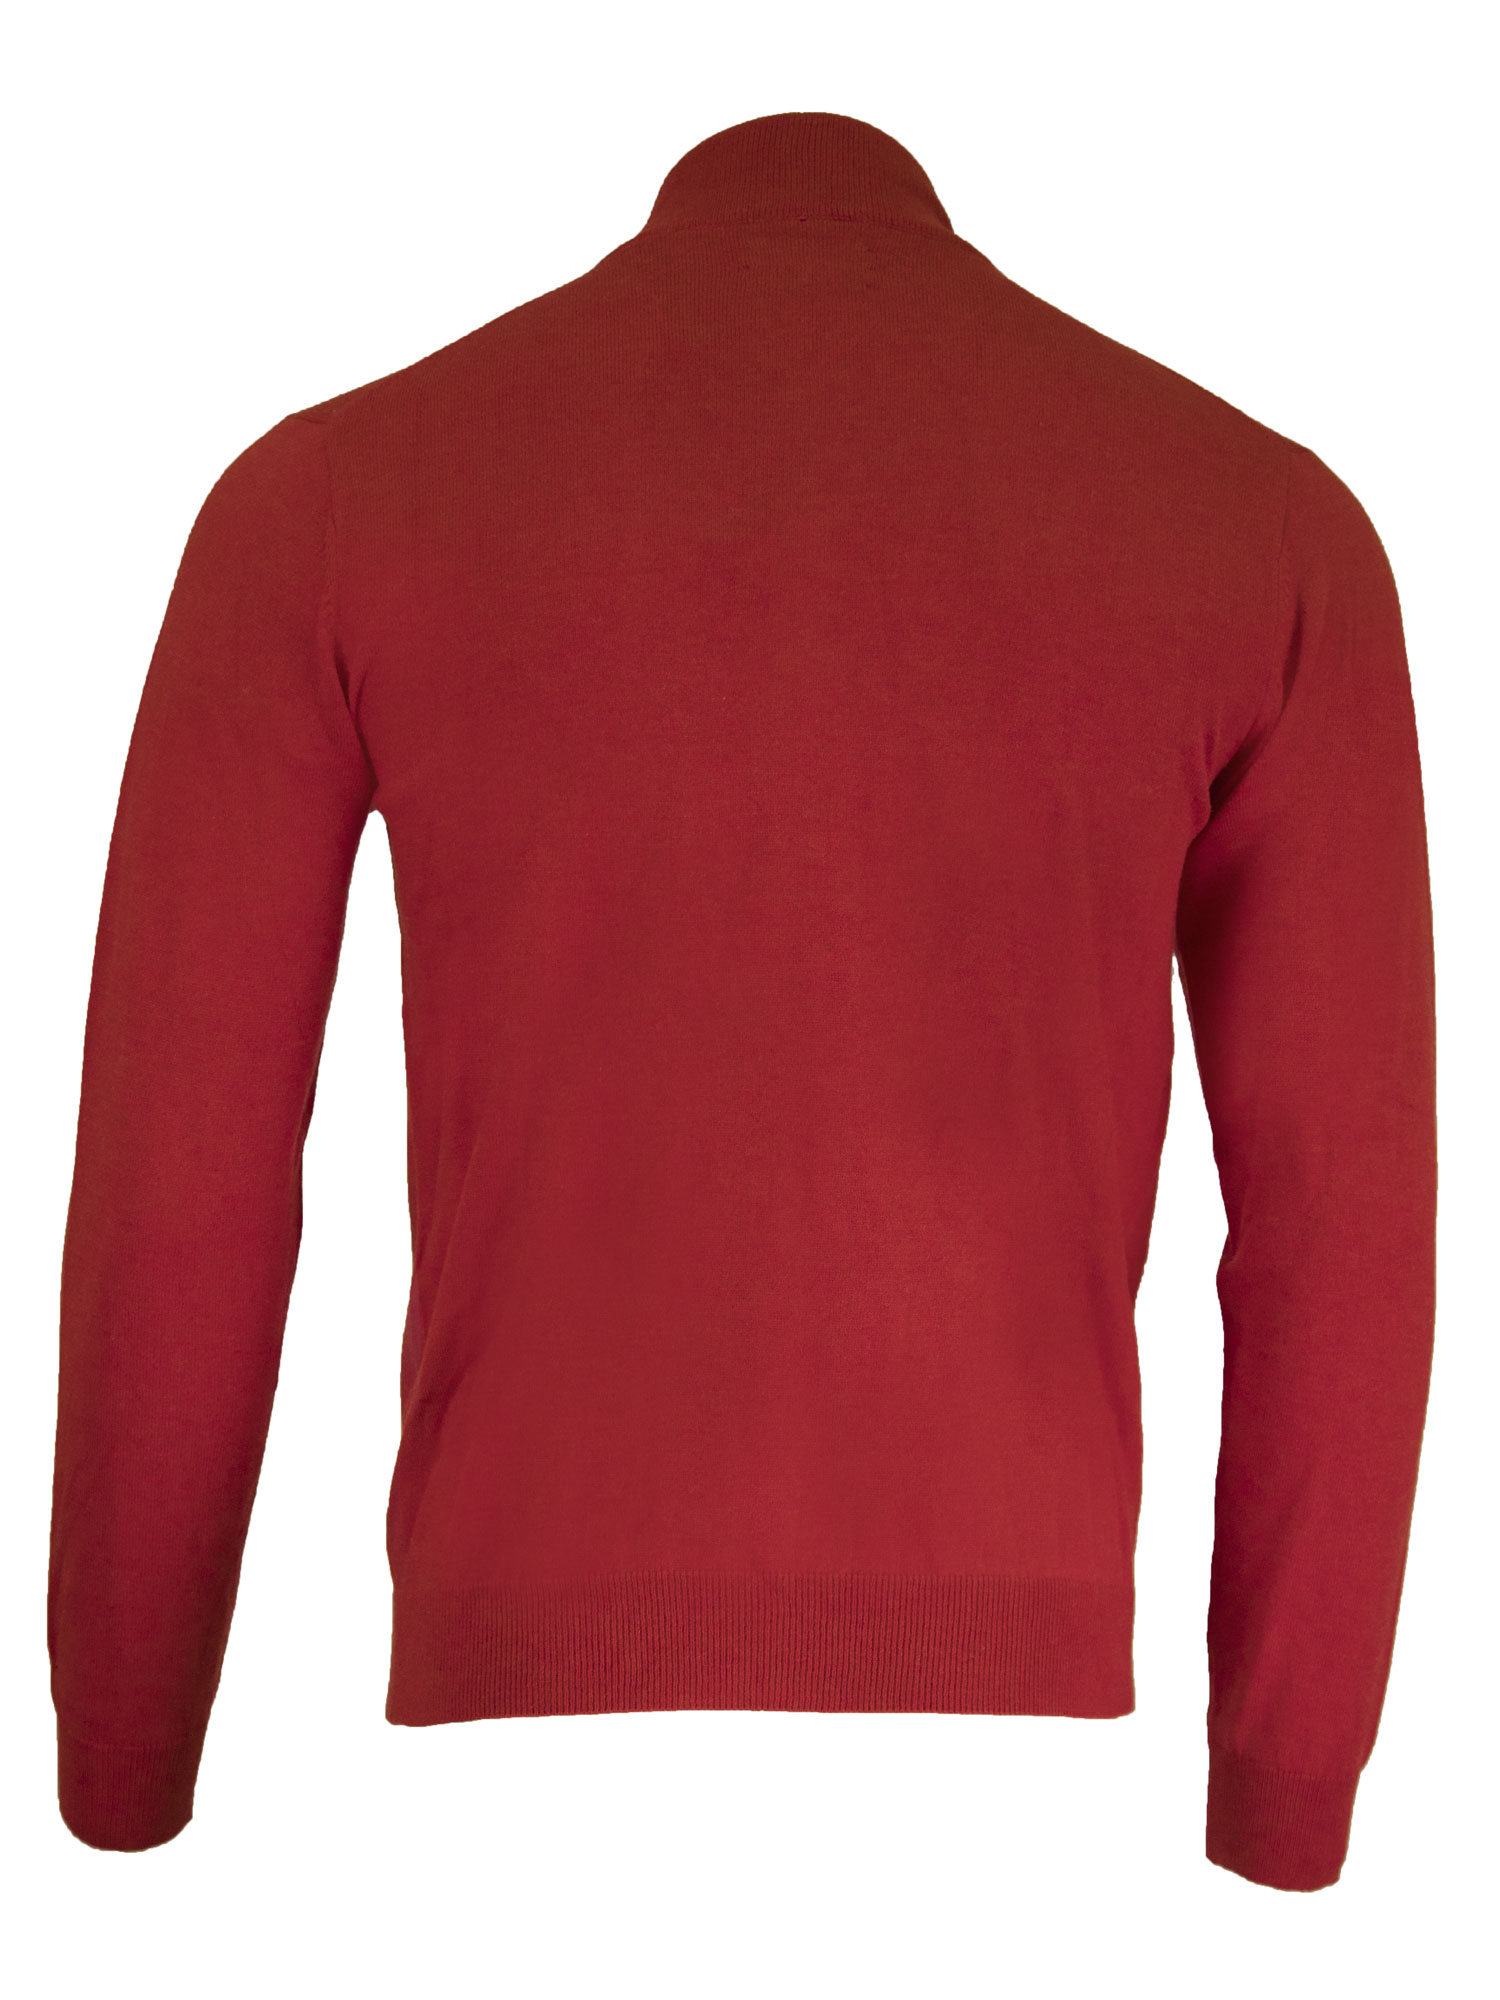 GANT Men's Bright Red Cotton Wool Full Zip Cardigan 83104 Size M $165 ...